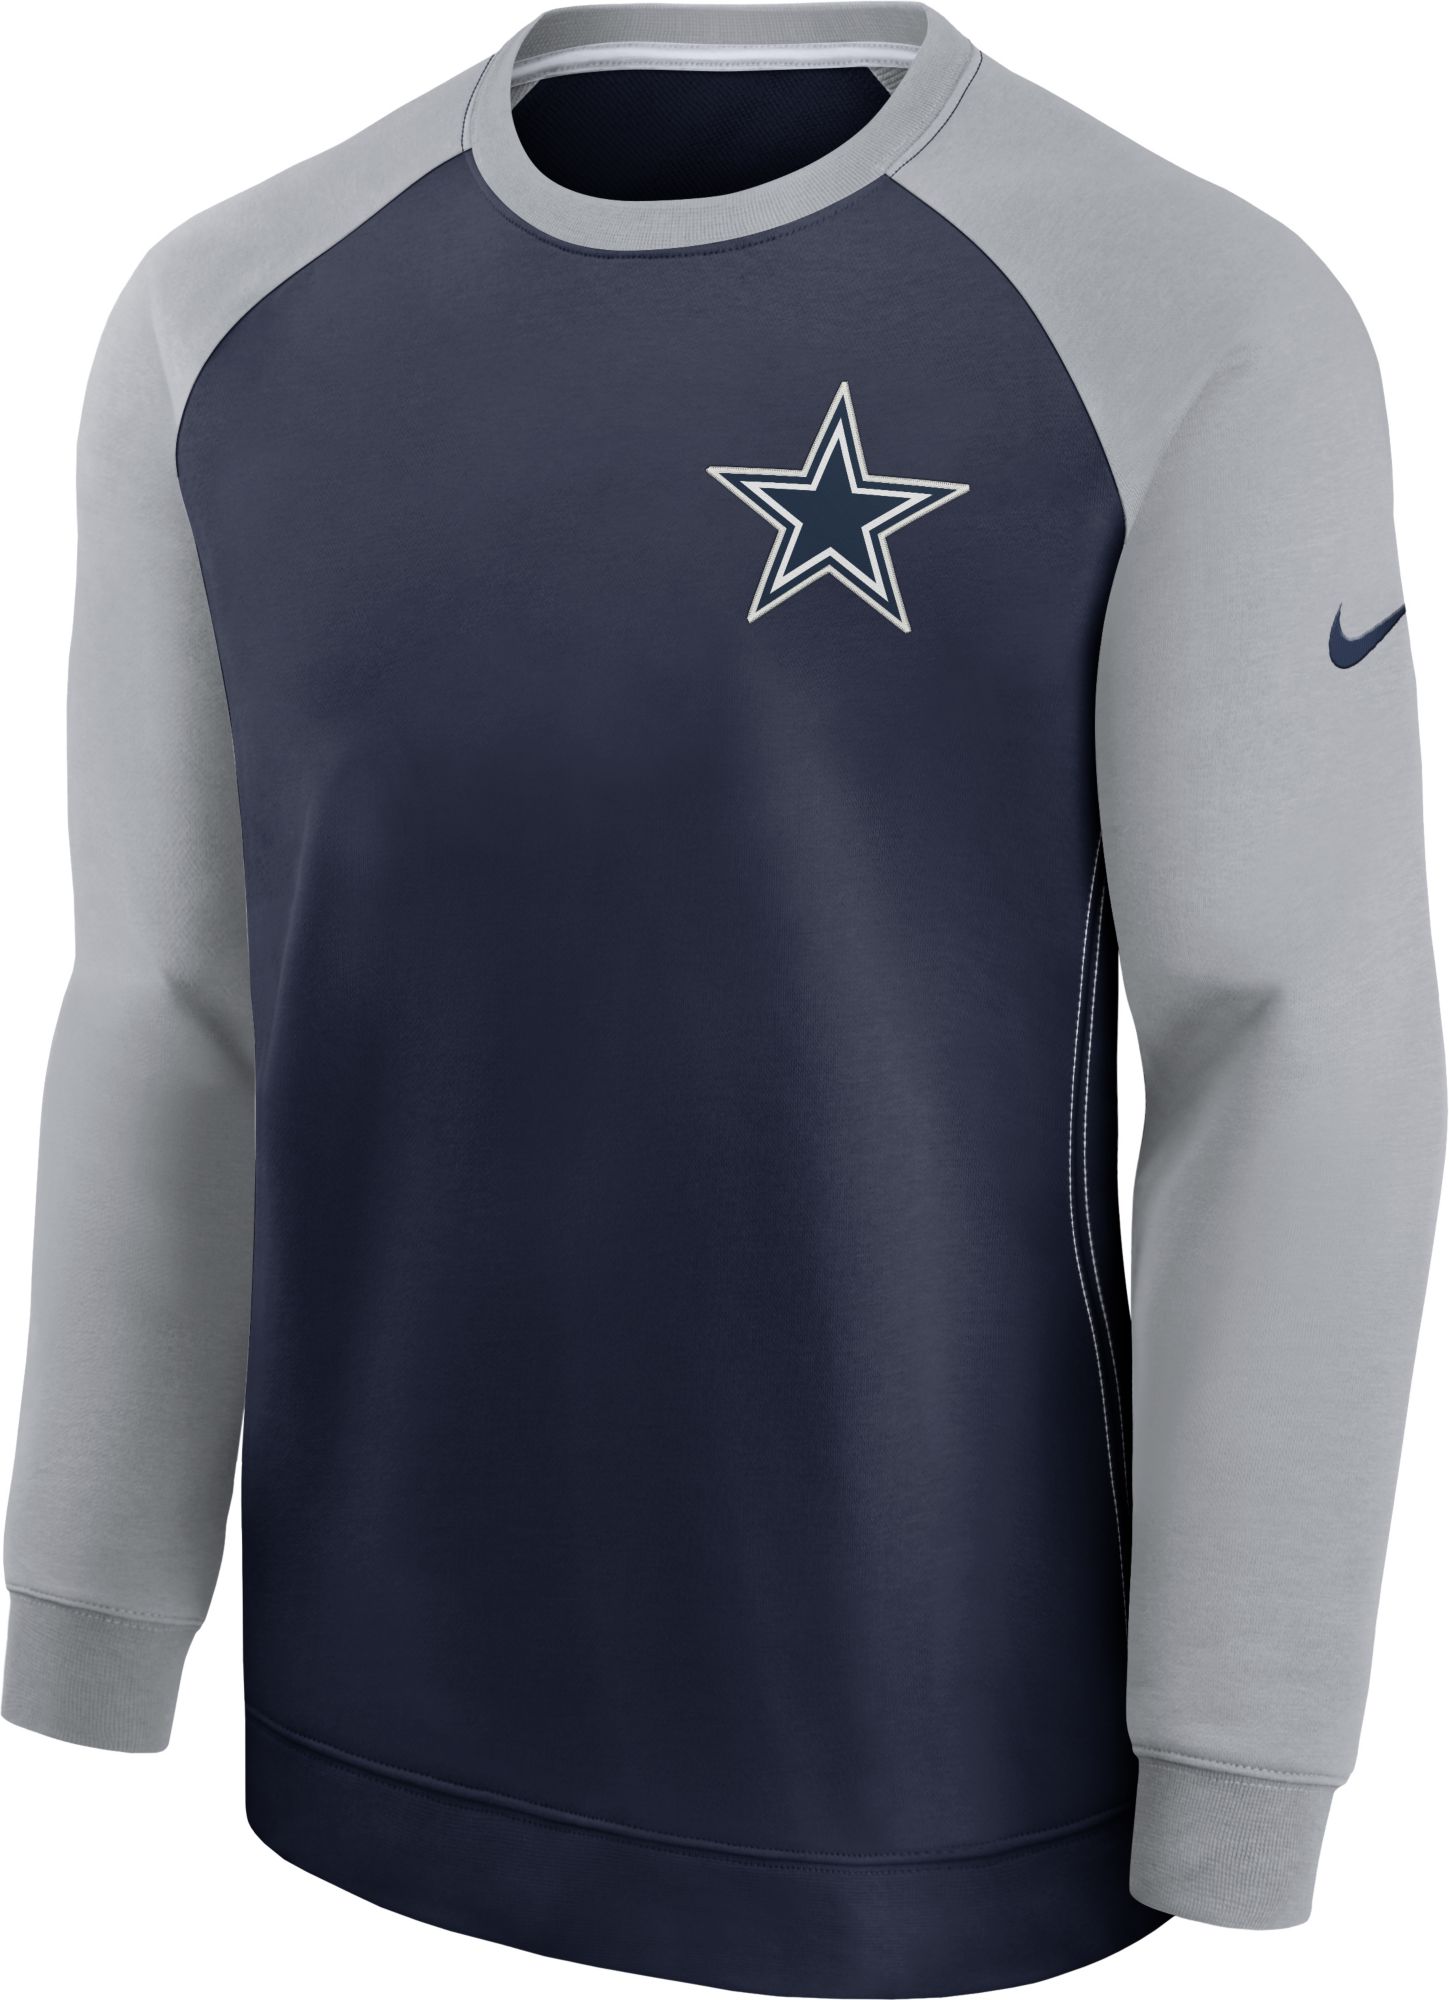 Nike / Men's Dallas Cowboys Historic Dri-FIT Long Sleeve Crew